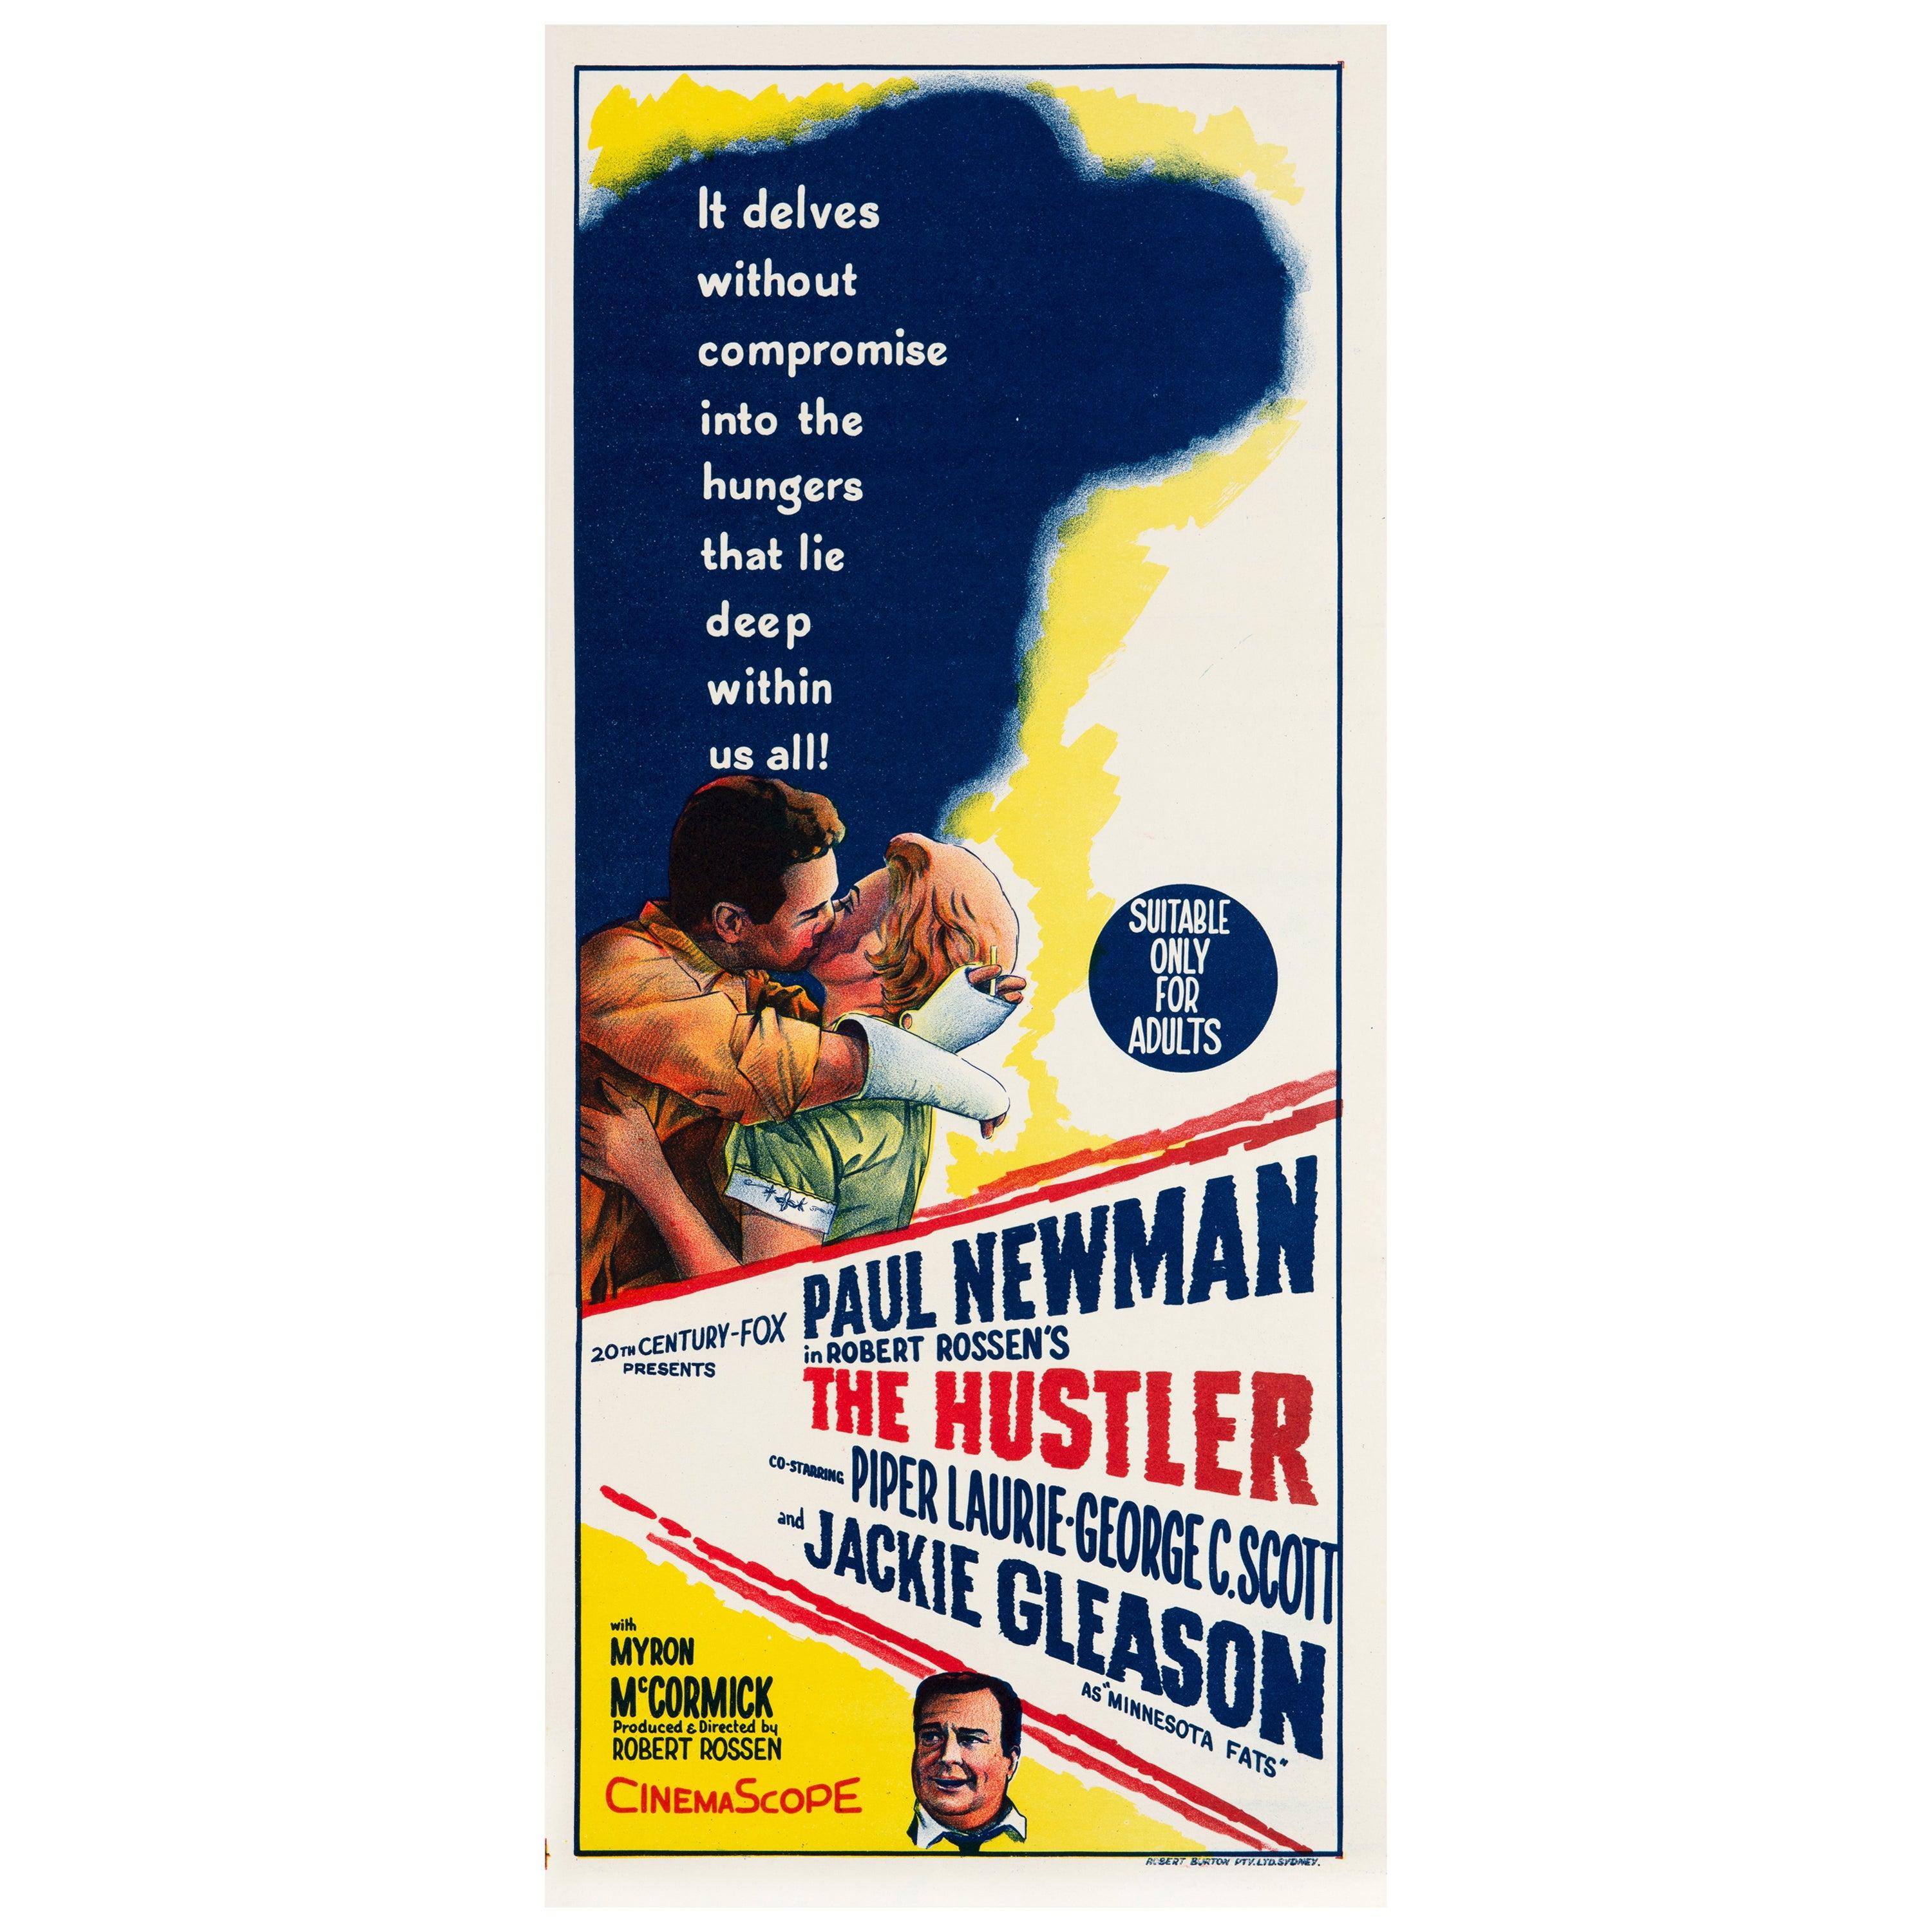 Paul Newman 'The Hustler' Original Vintage Movie Poster, Australian, 1962 - Art by Unknown